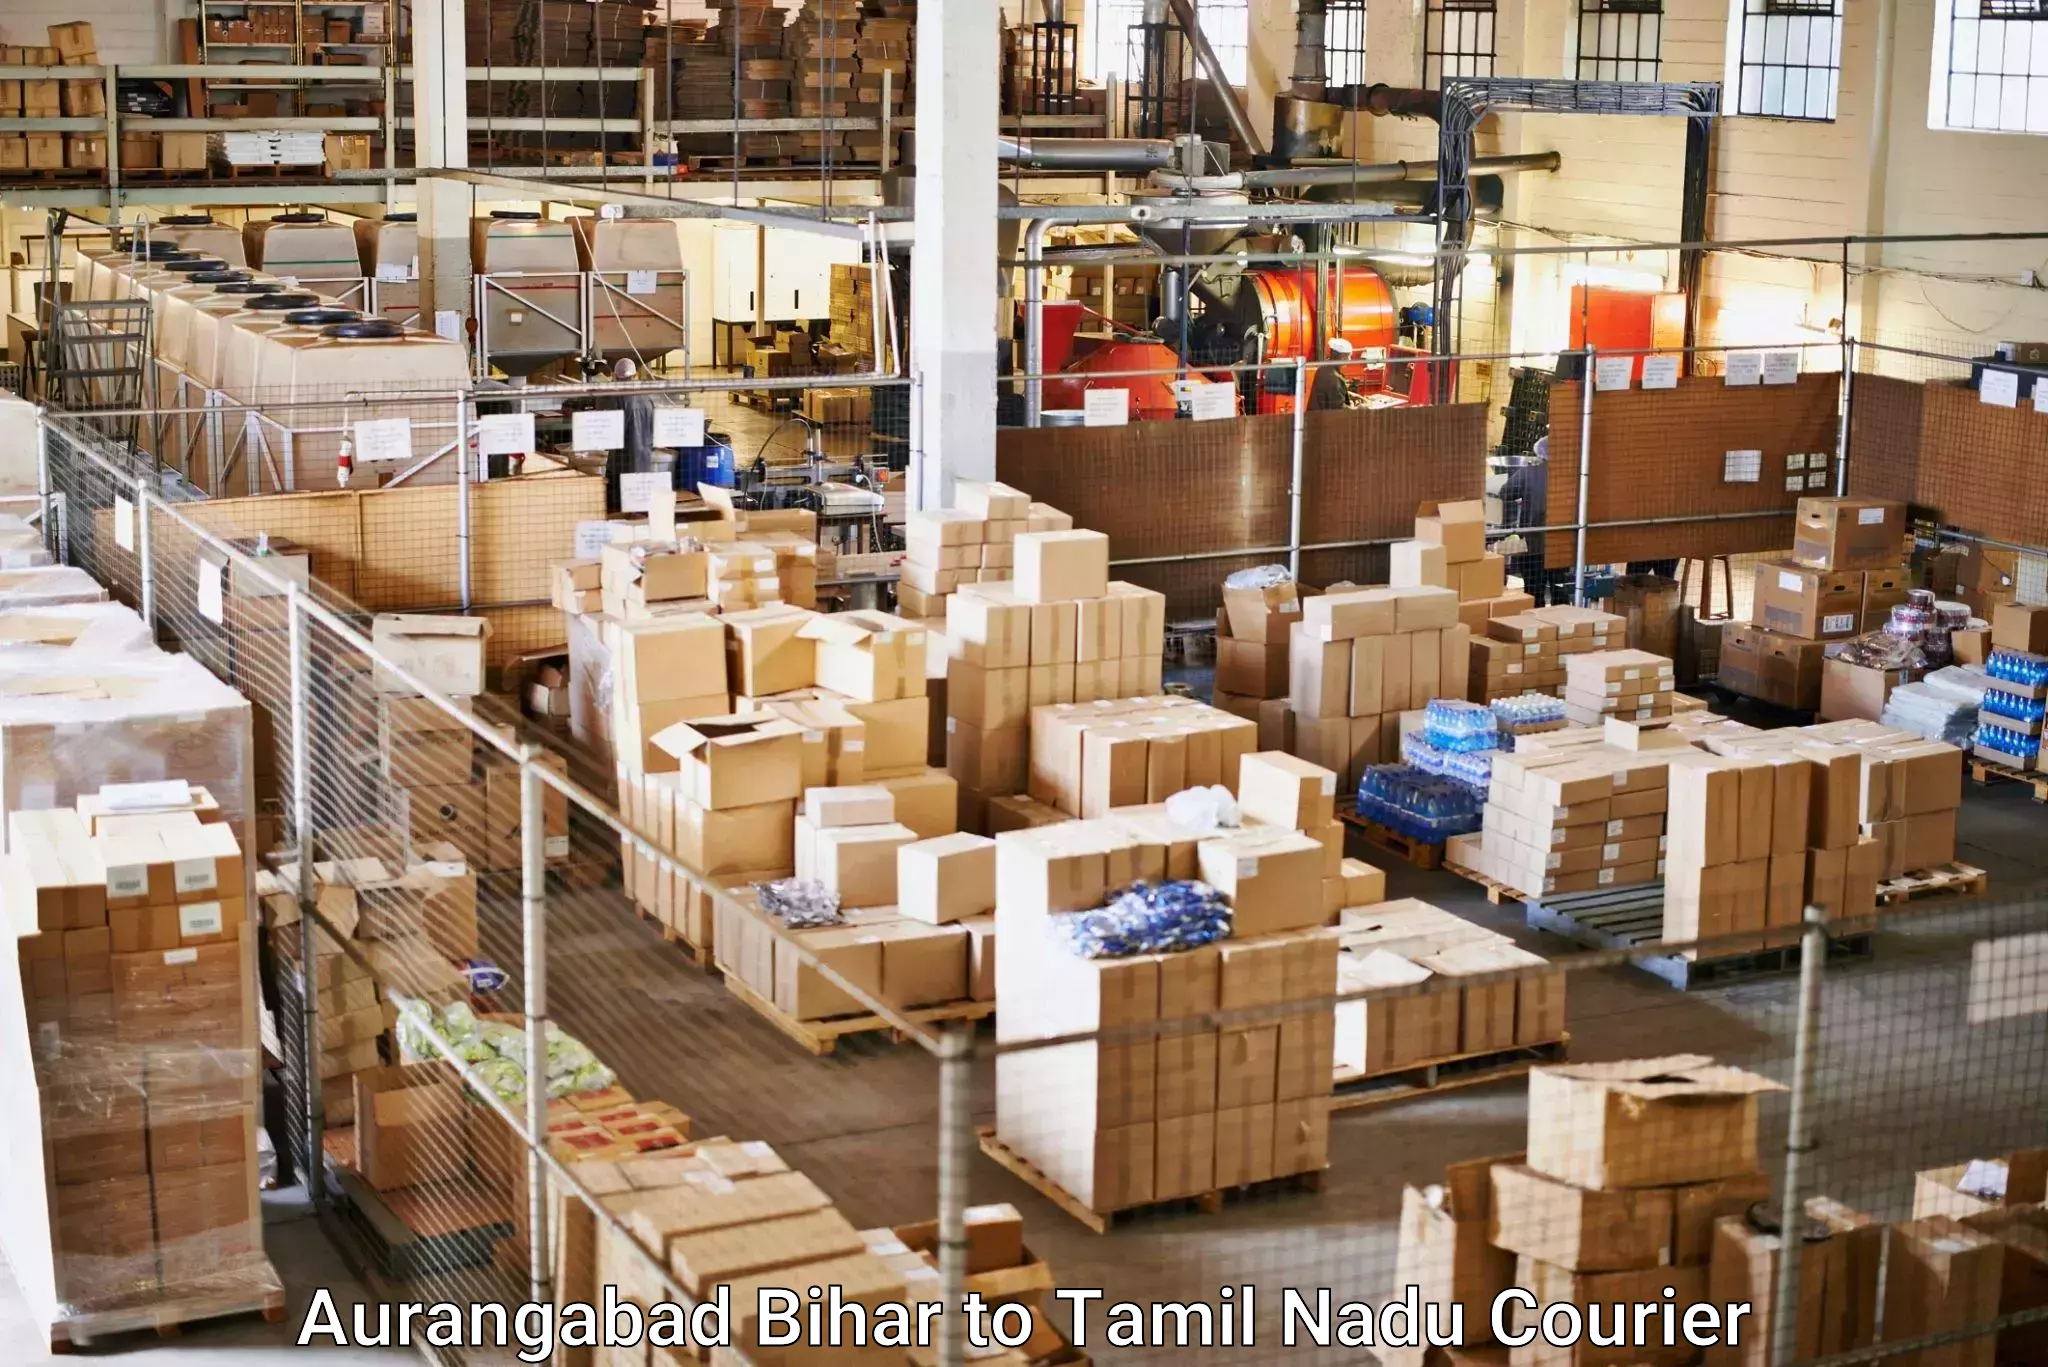 Global shipping networks Aurangabad Bihar to Tamil Nadu